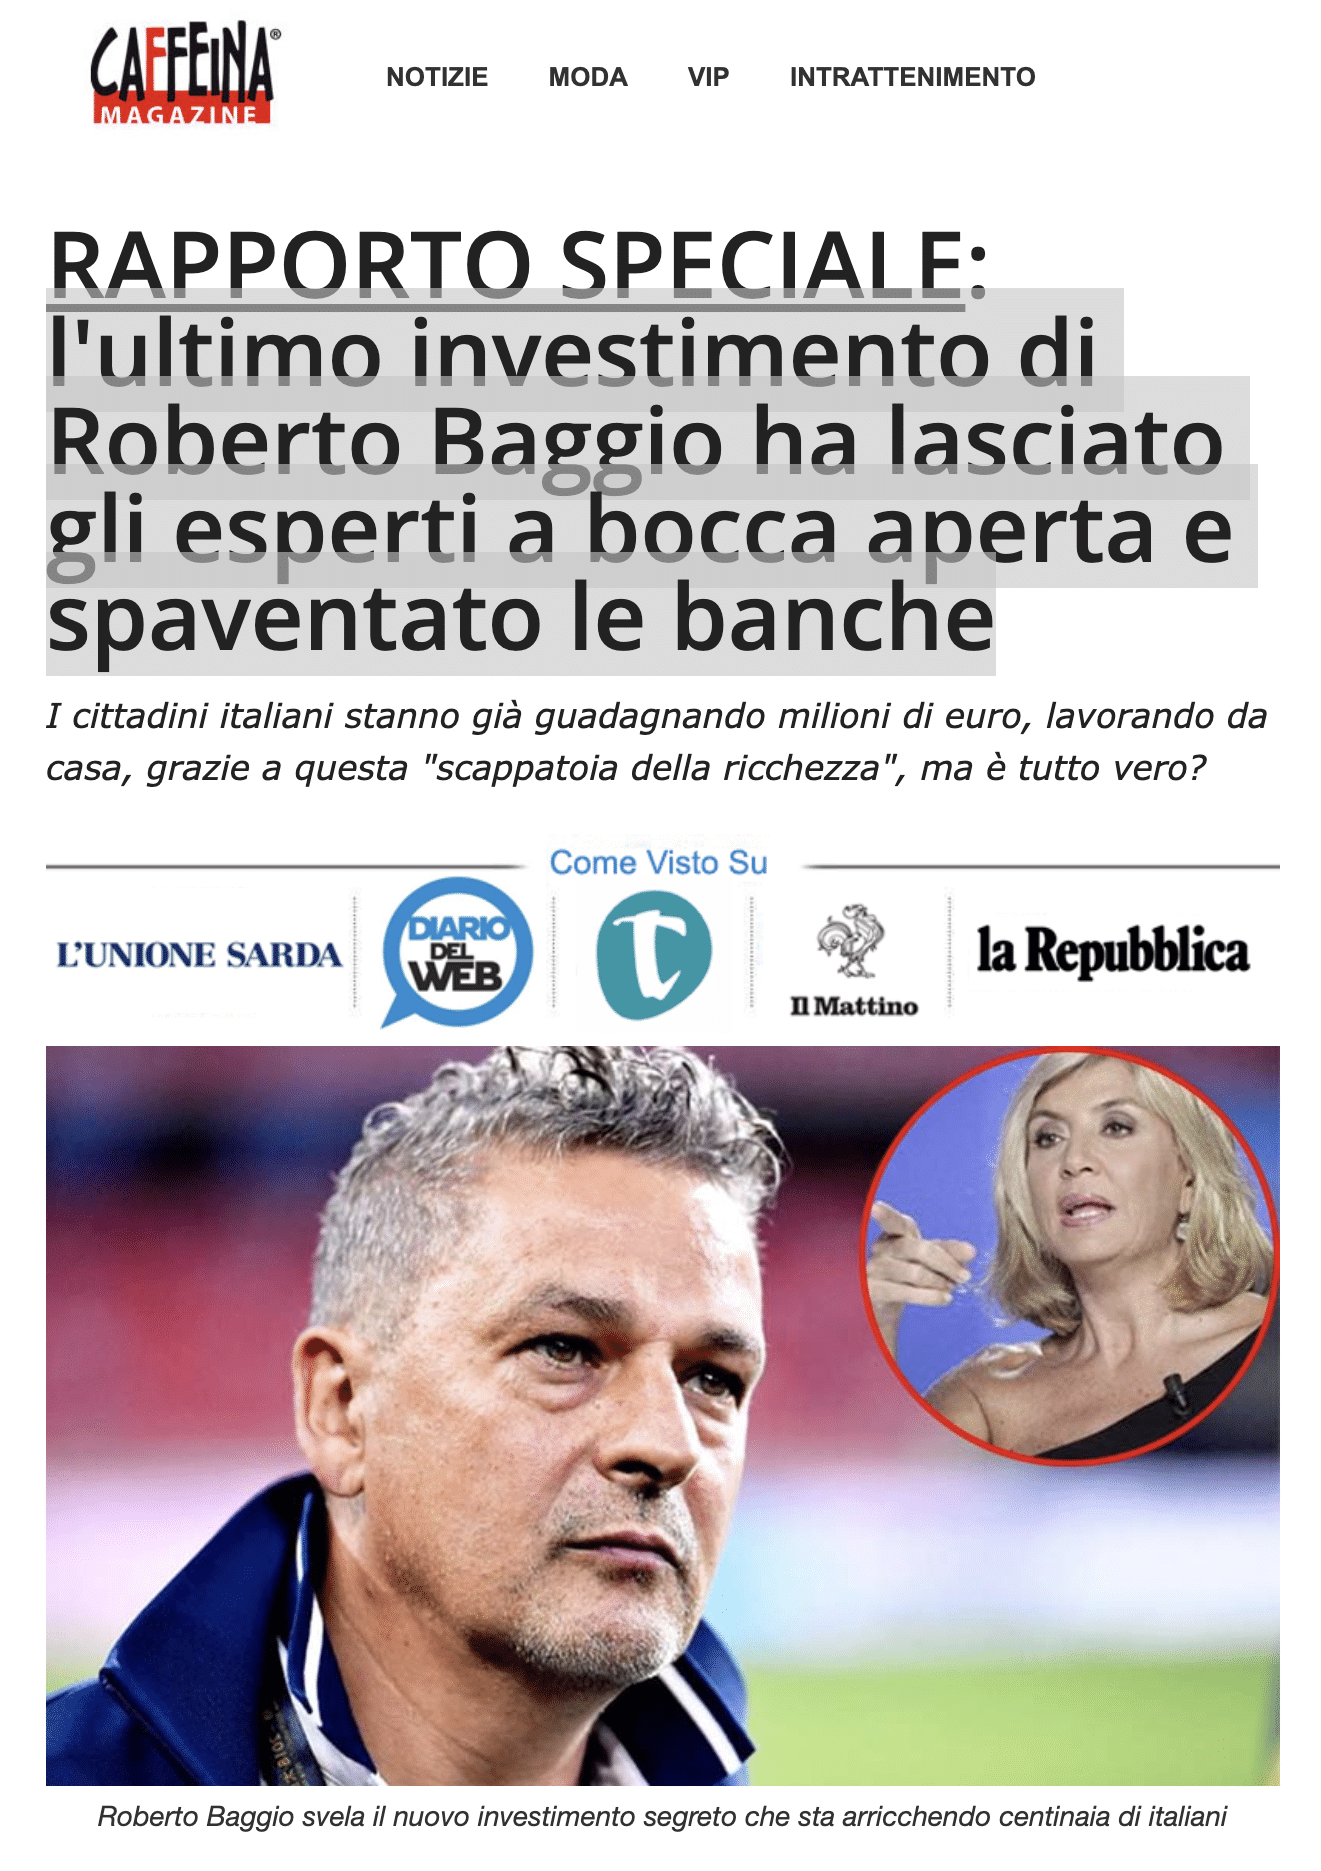 Roberto Baggio rich with BTC Profit: the fake news